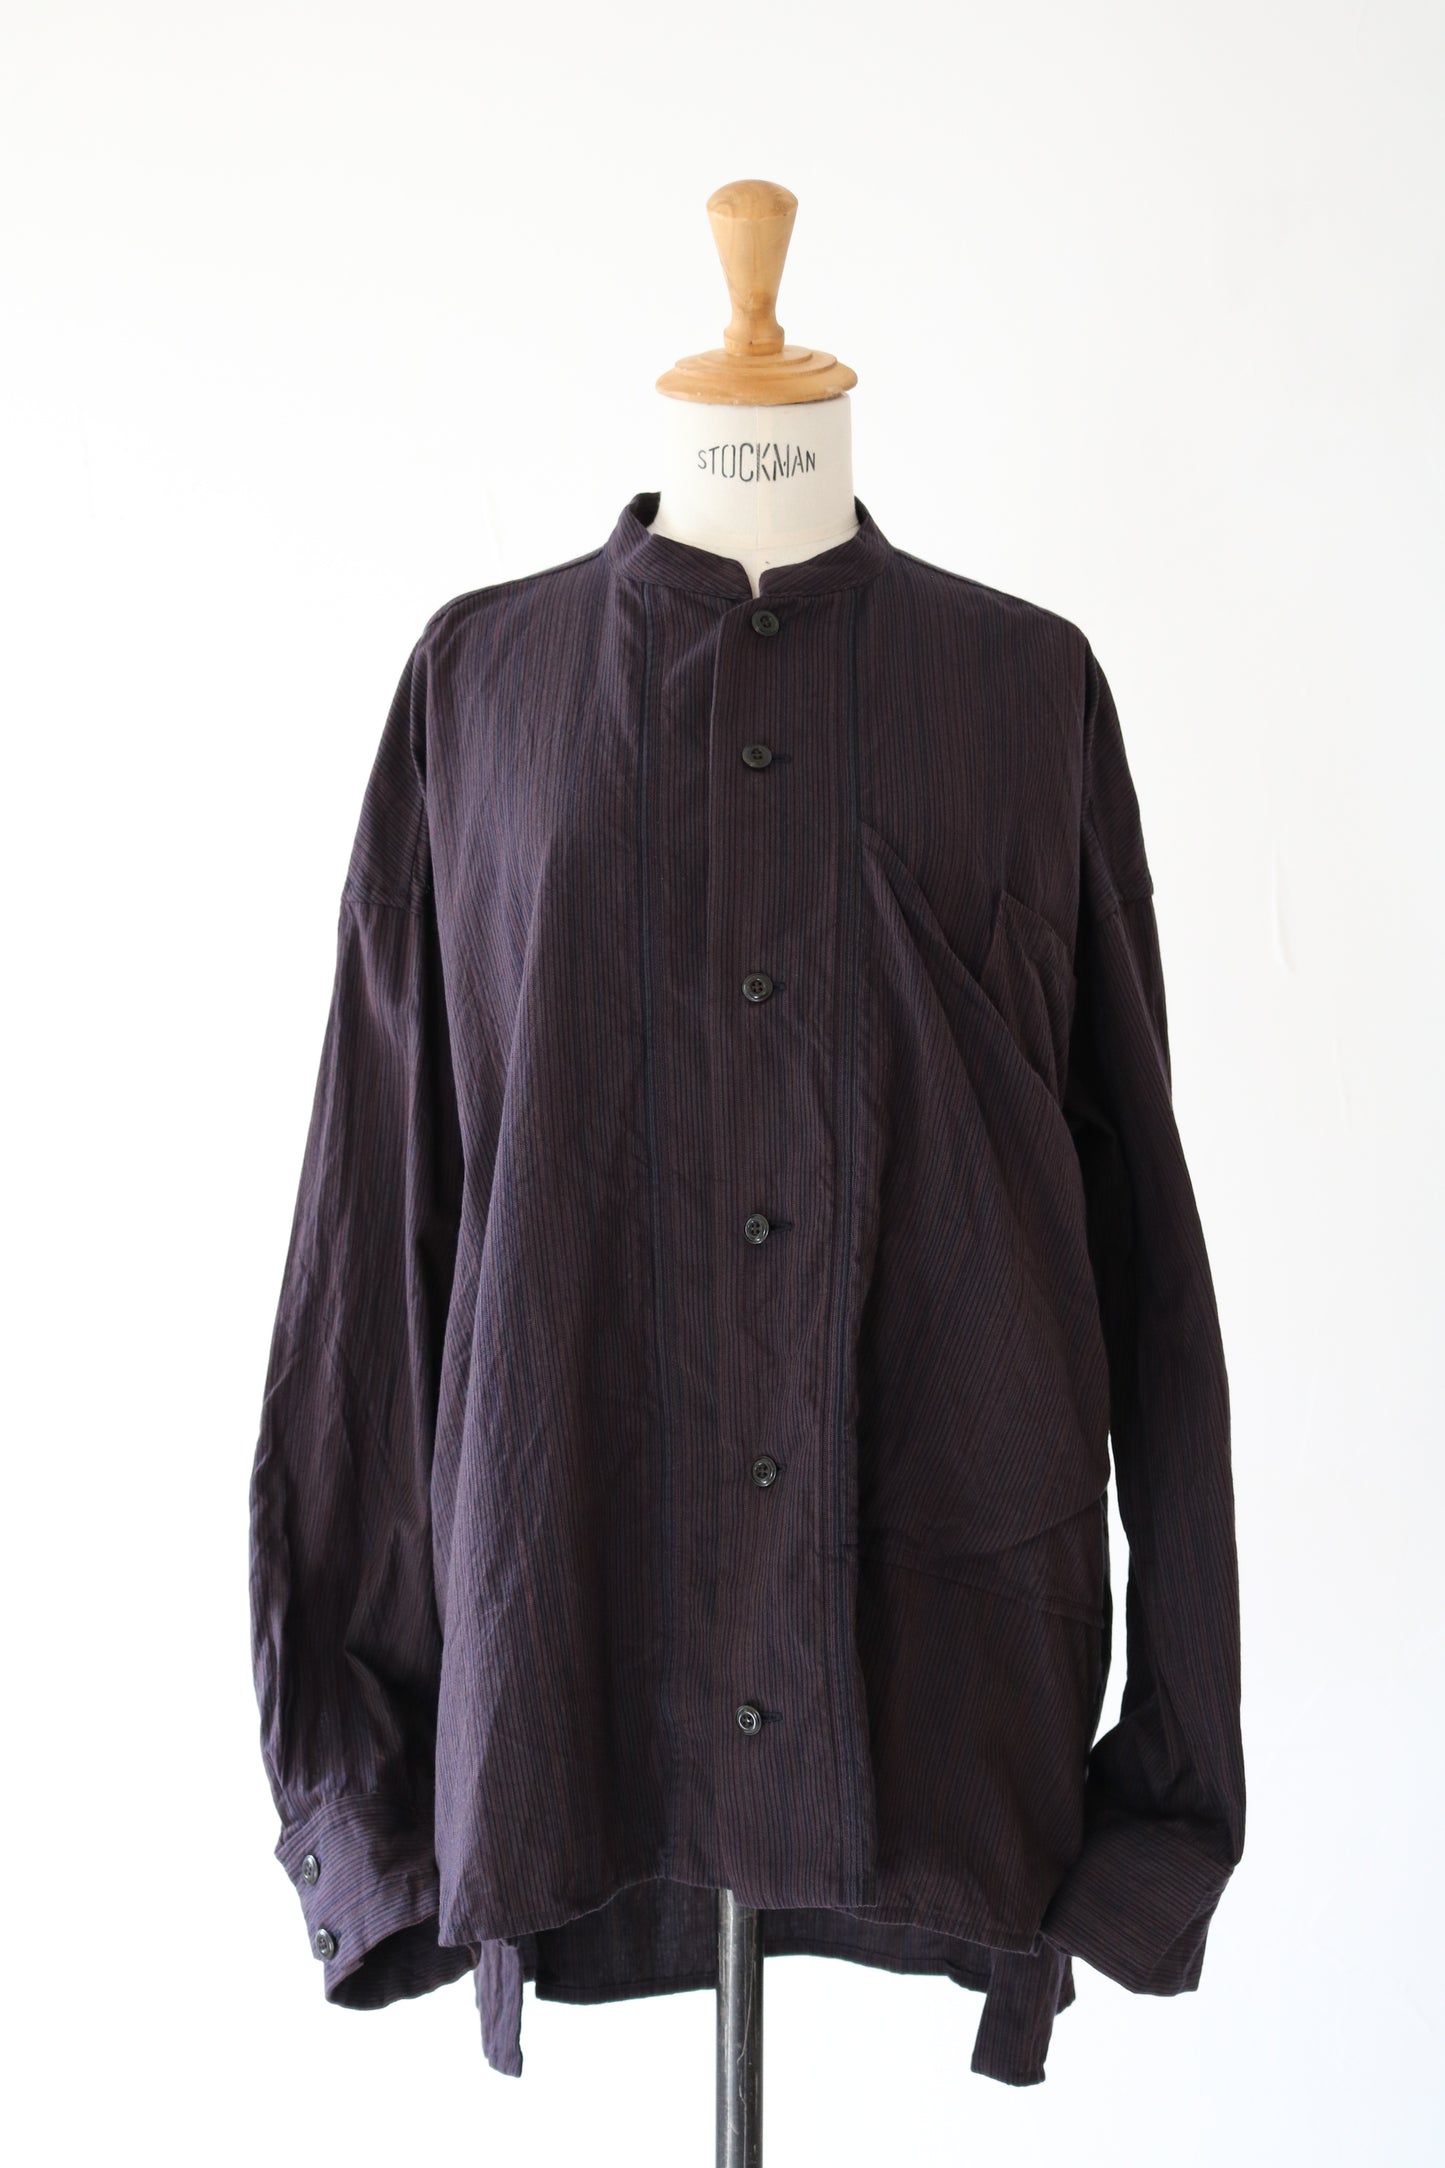 lama shirt K505 SIC yatara.stripe bronze